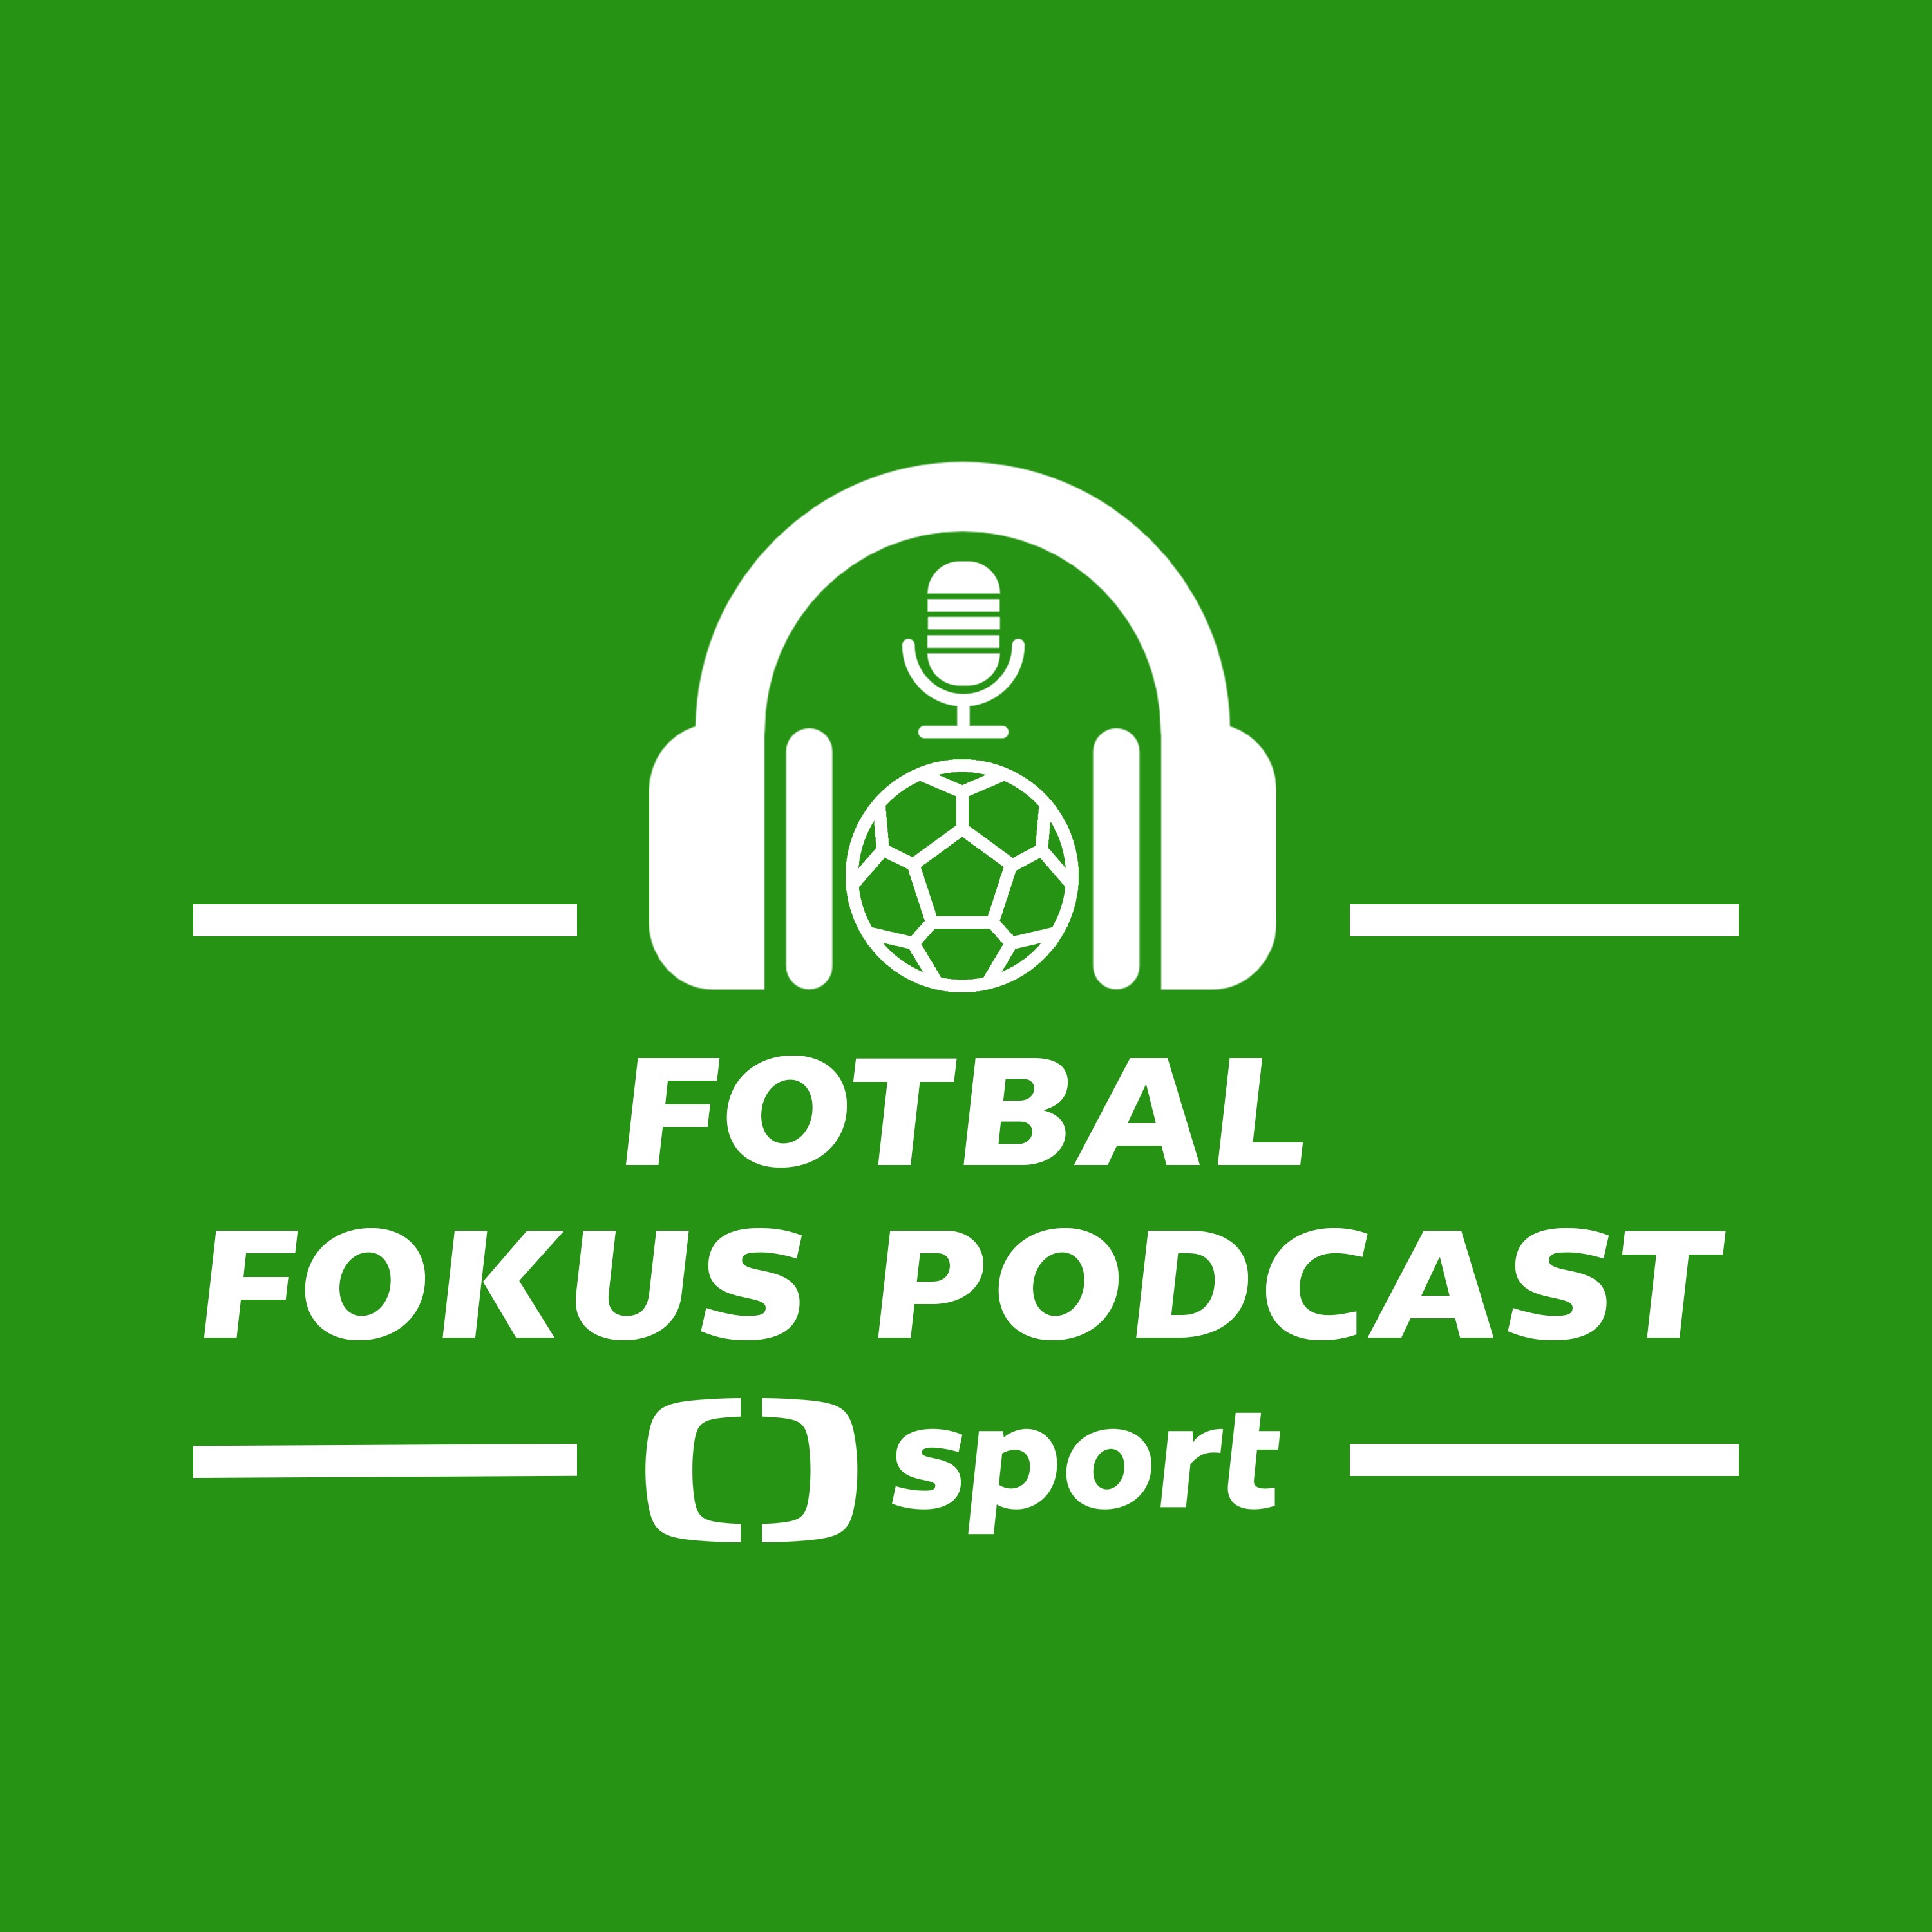 Fotbal fokus podcast: Chorého hlavička a VAR, ostuda Slavie či možný návrat Stancia